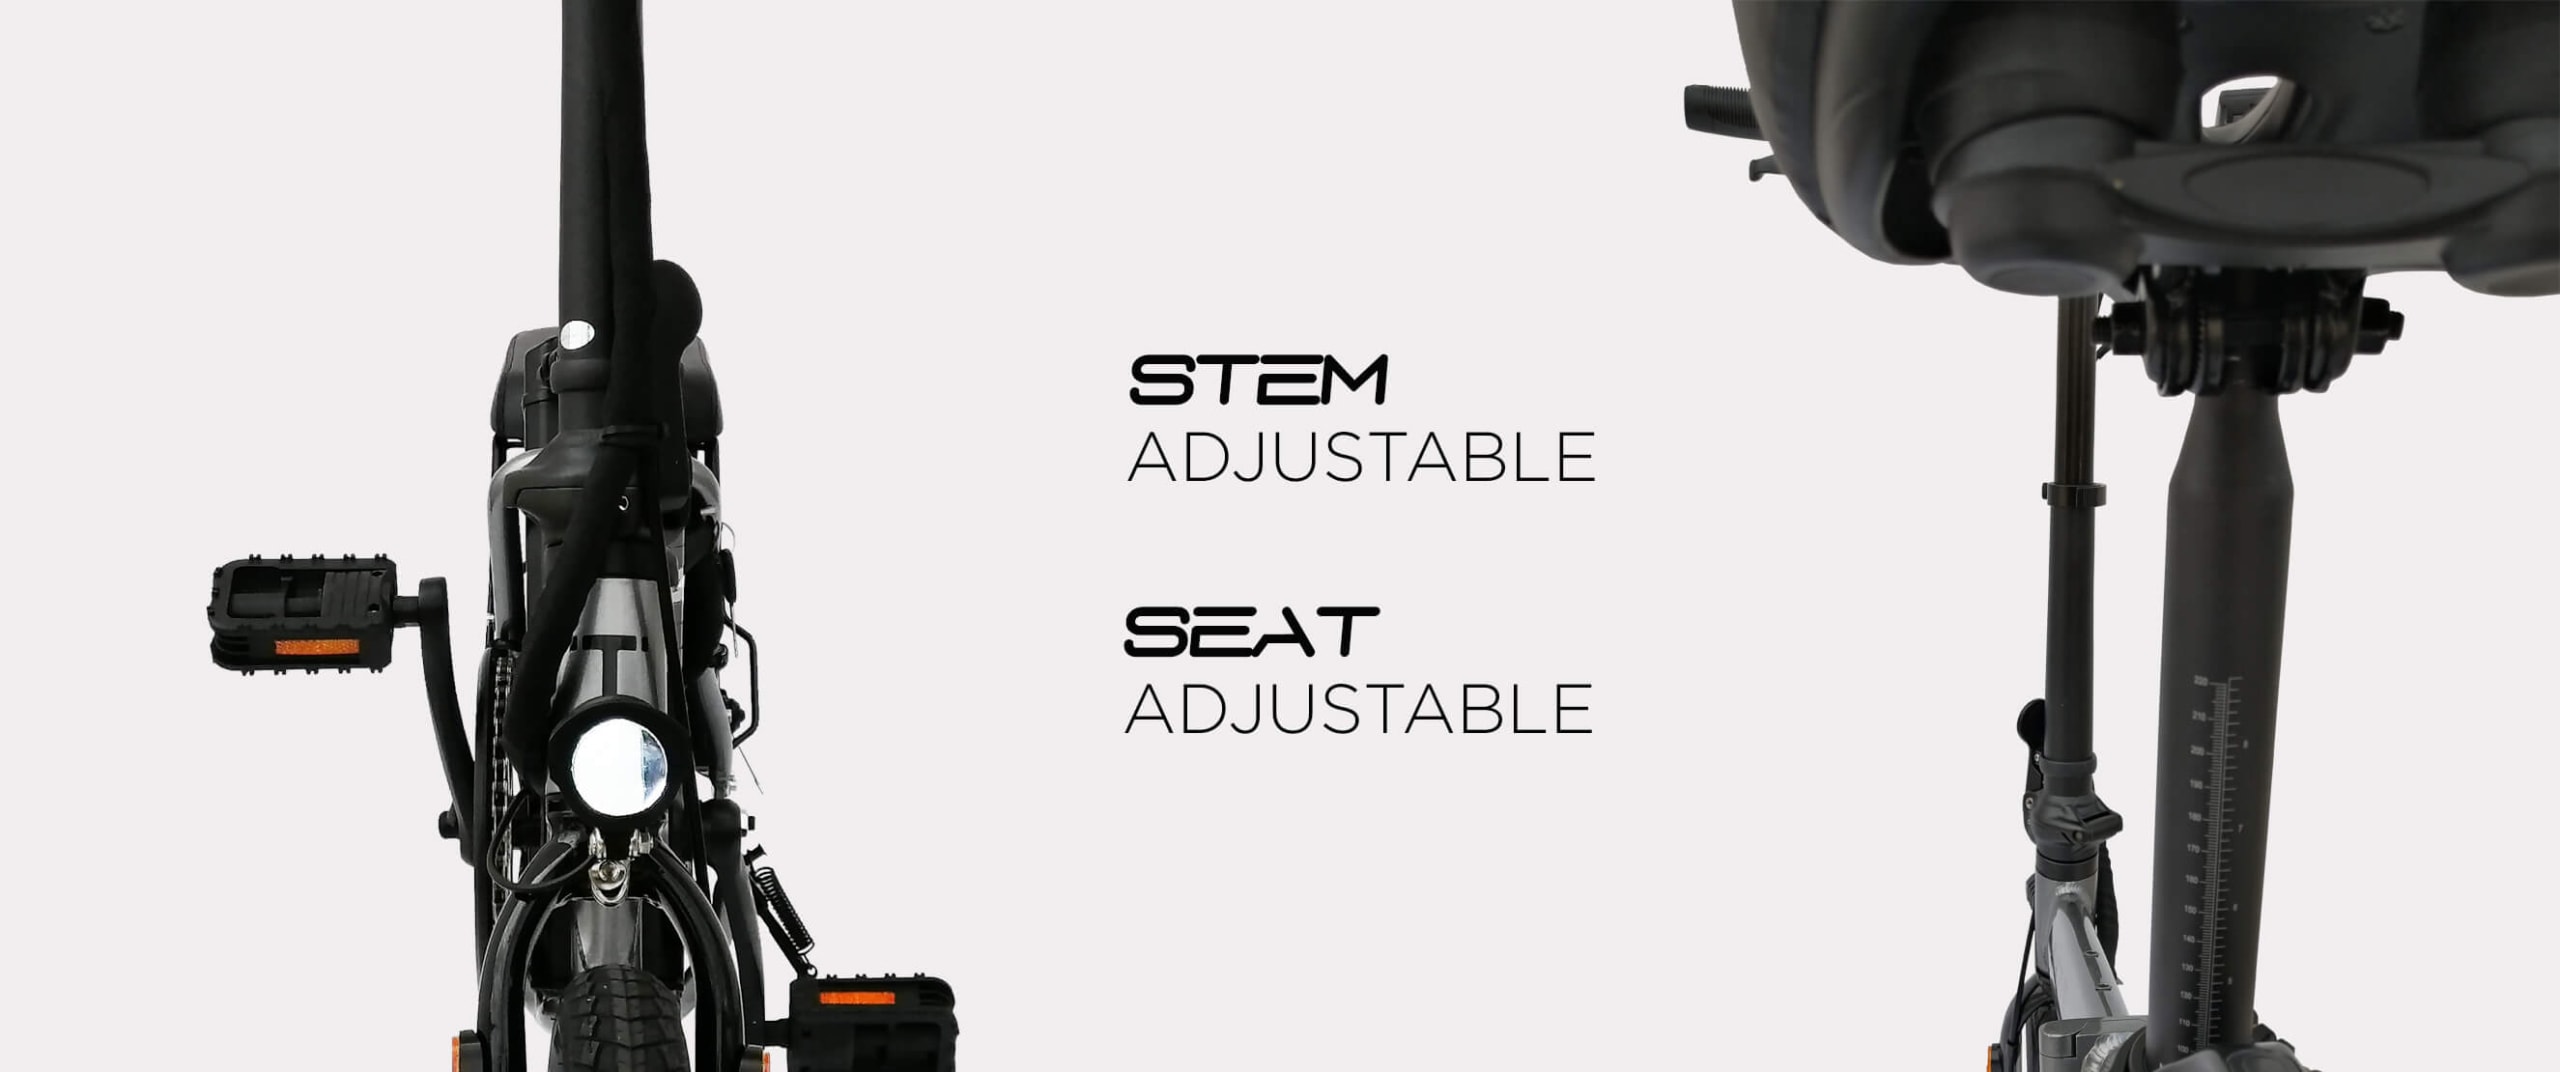 JI-MOVE MC LTA approved ebike adjustable stem and seat